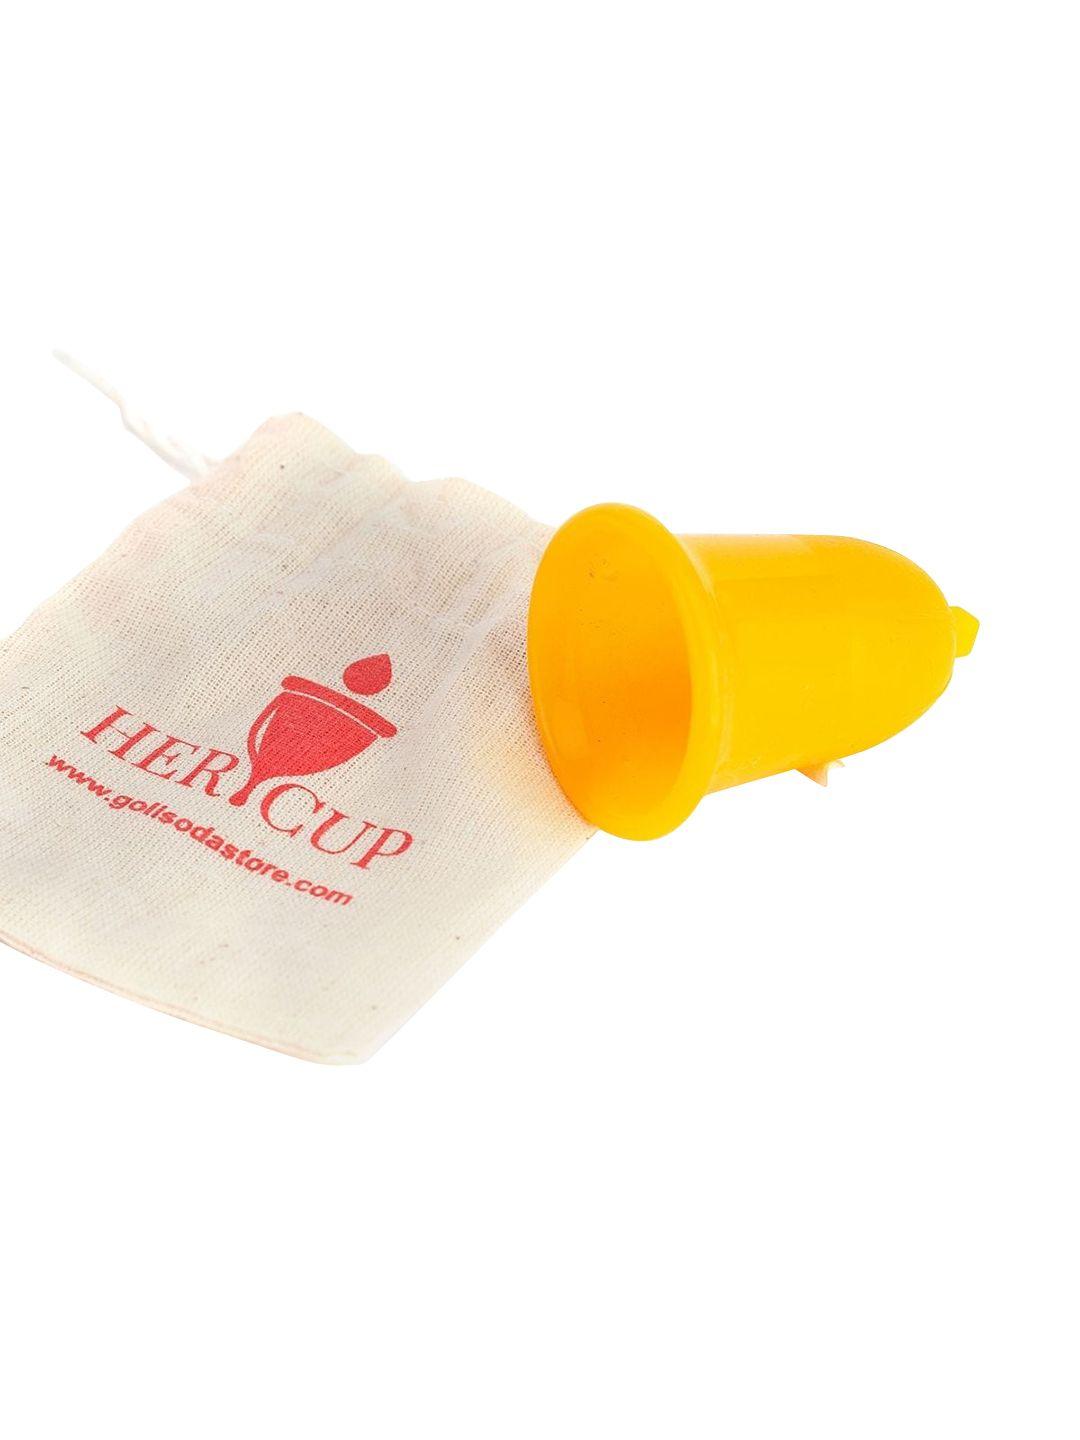 goli soda yellow menstrual cup